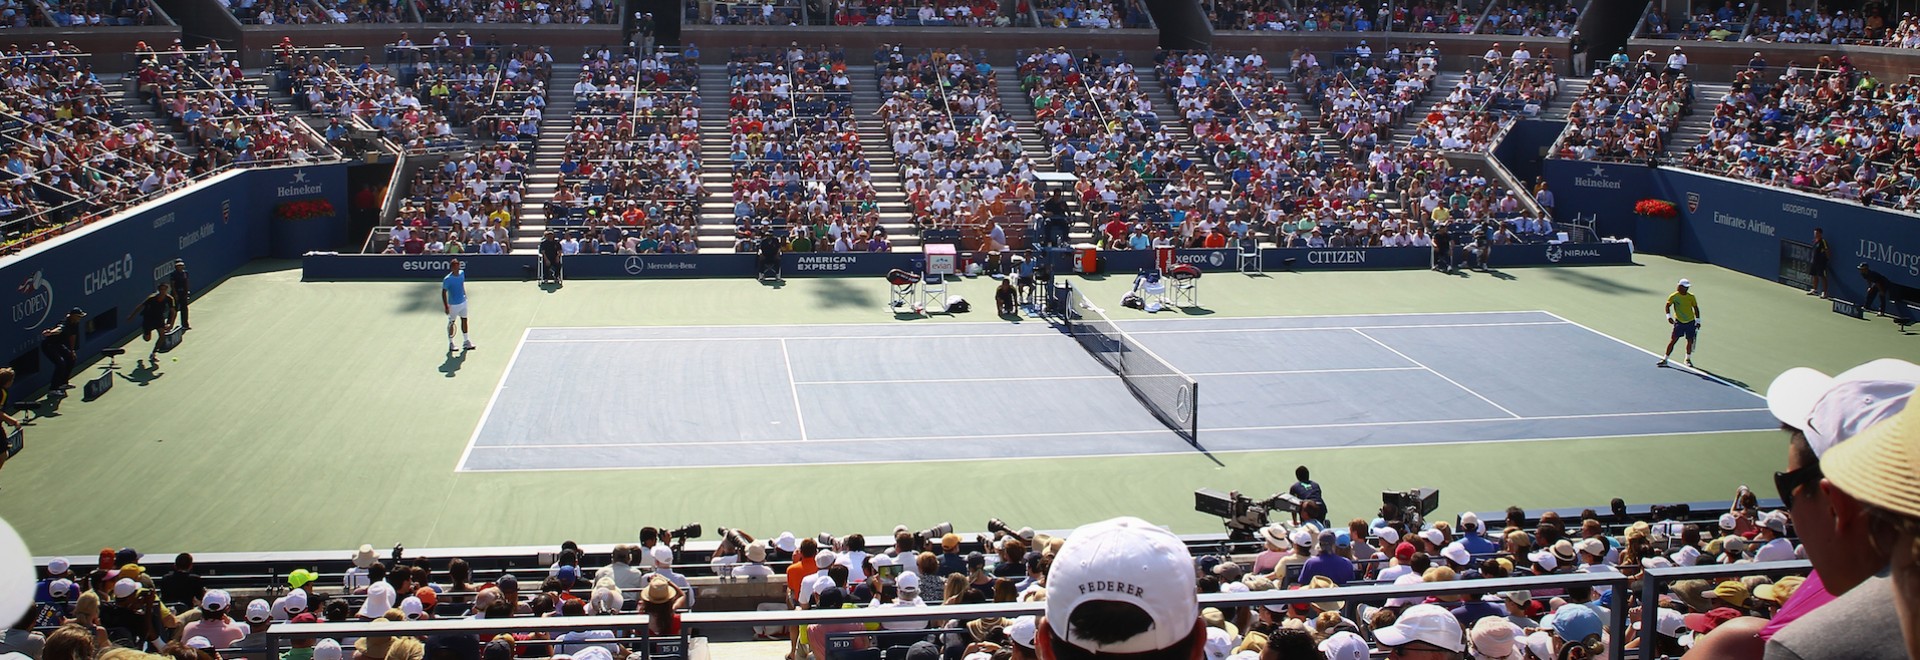 USTA Billie Jean King National Tennis Center, New York - Book. Travel. Play.